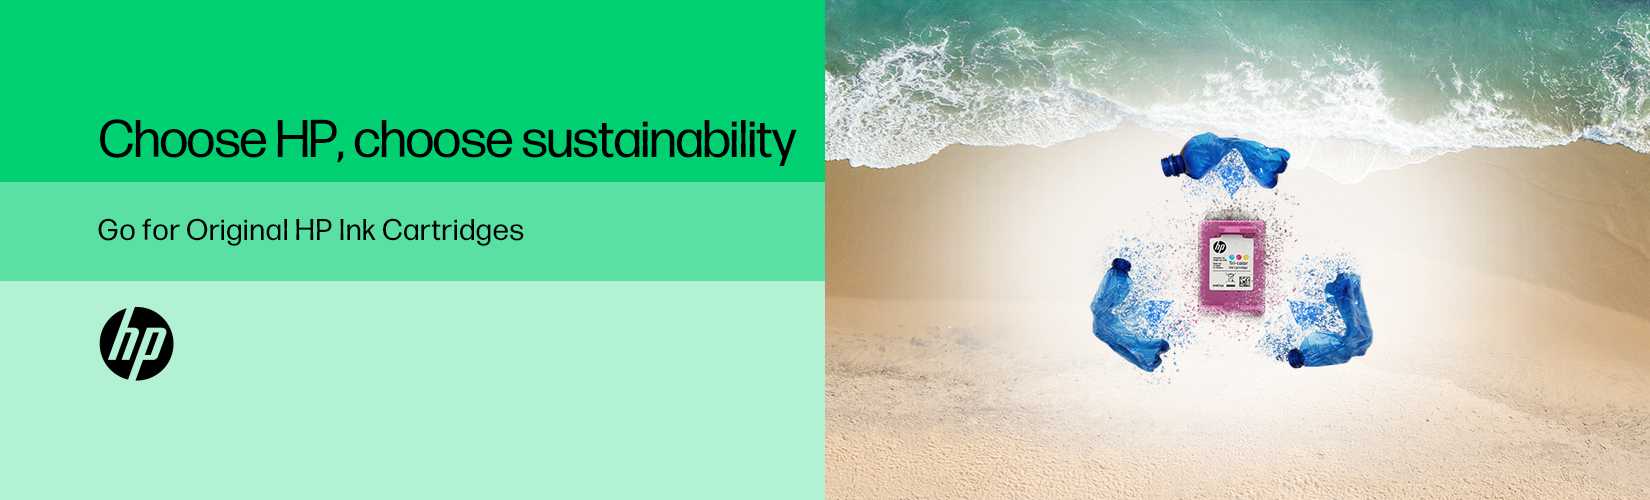 Choose HP, choose sustainability.